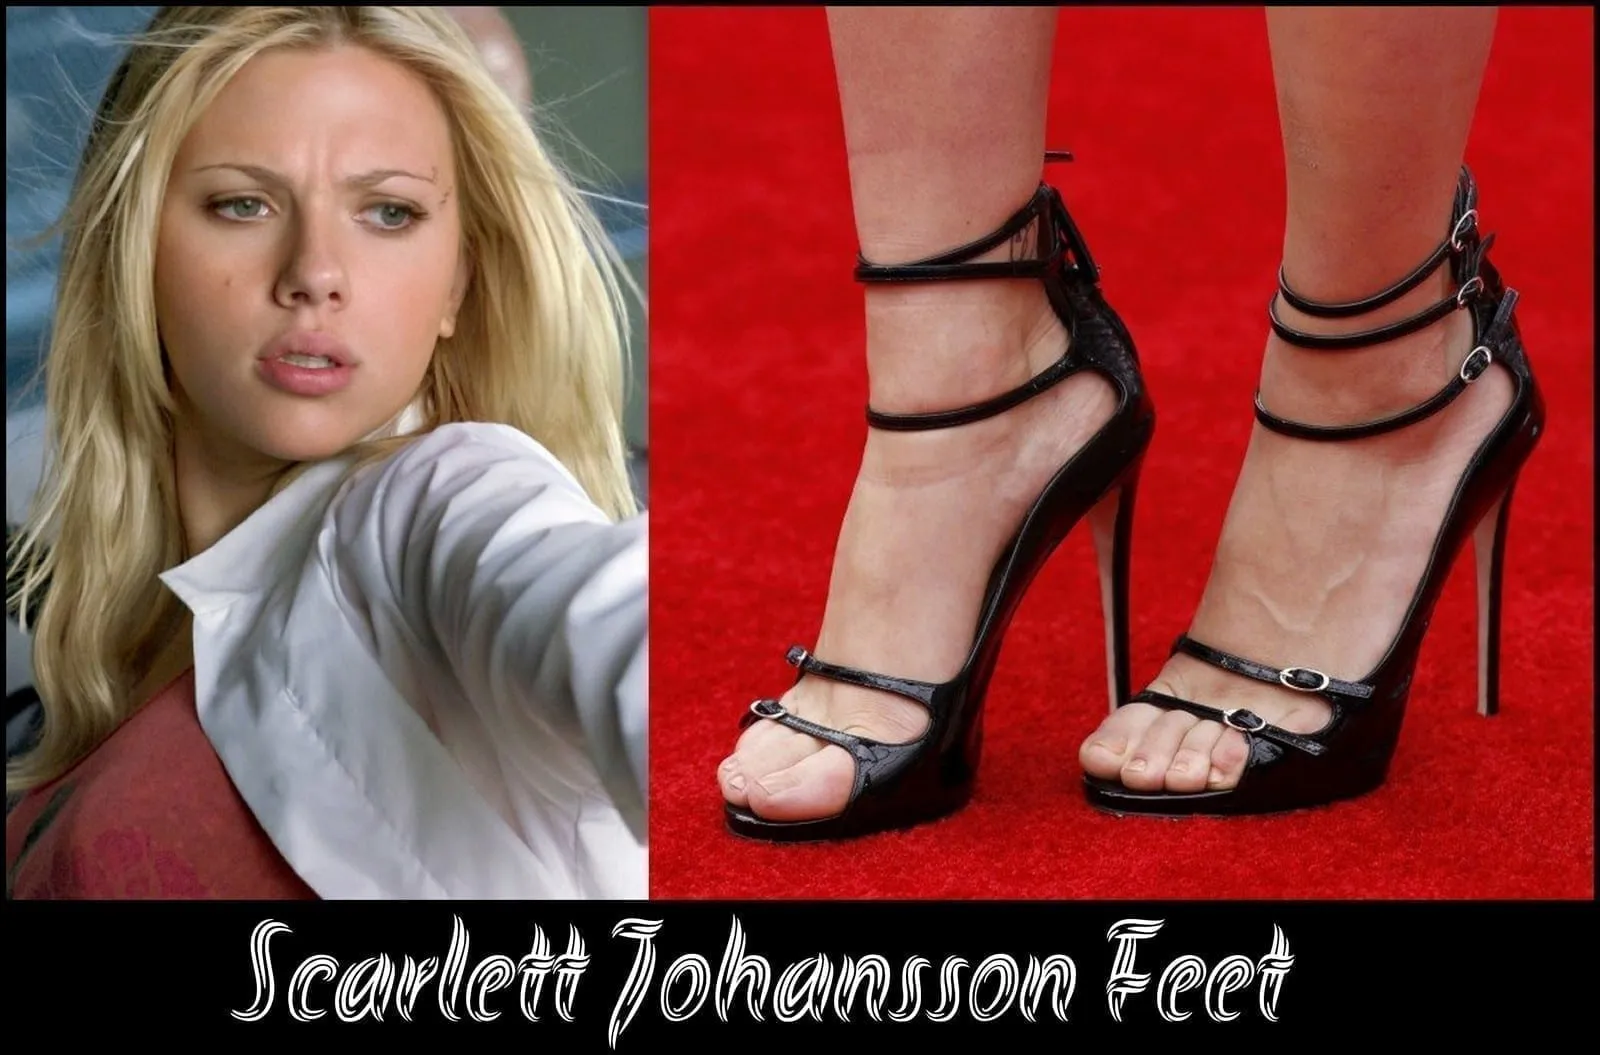 13. Scarlett Johansson’s Feet.